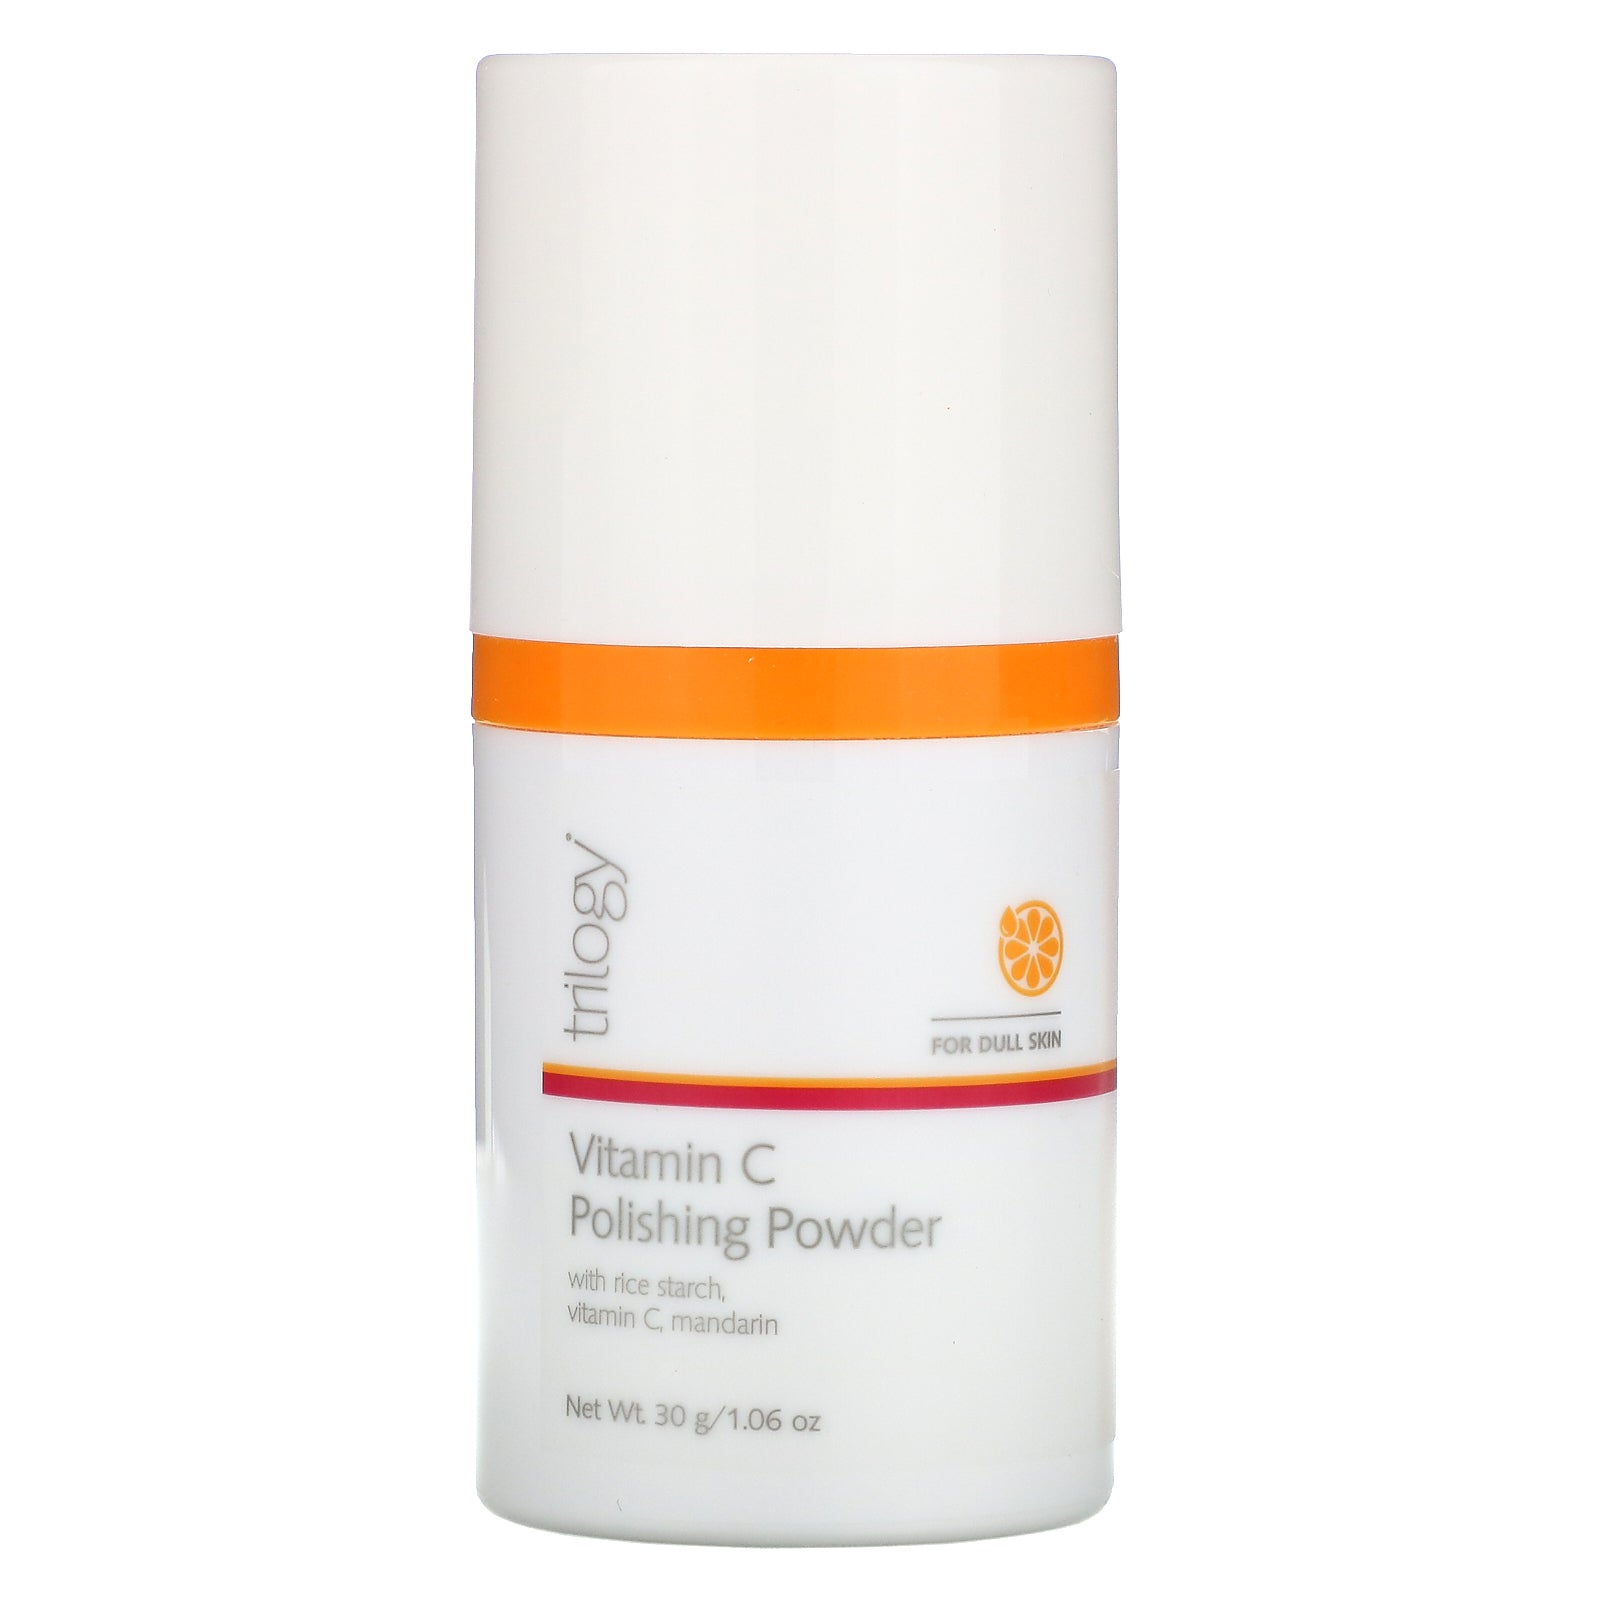 Trilogy Vitamin C Polishing Powder, 1.06 oz (30 g)